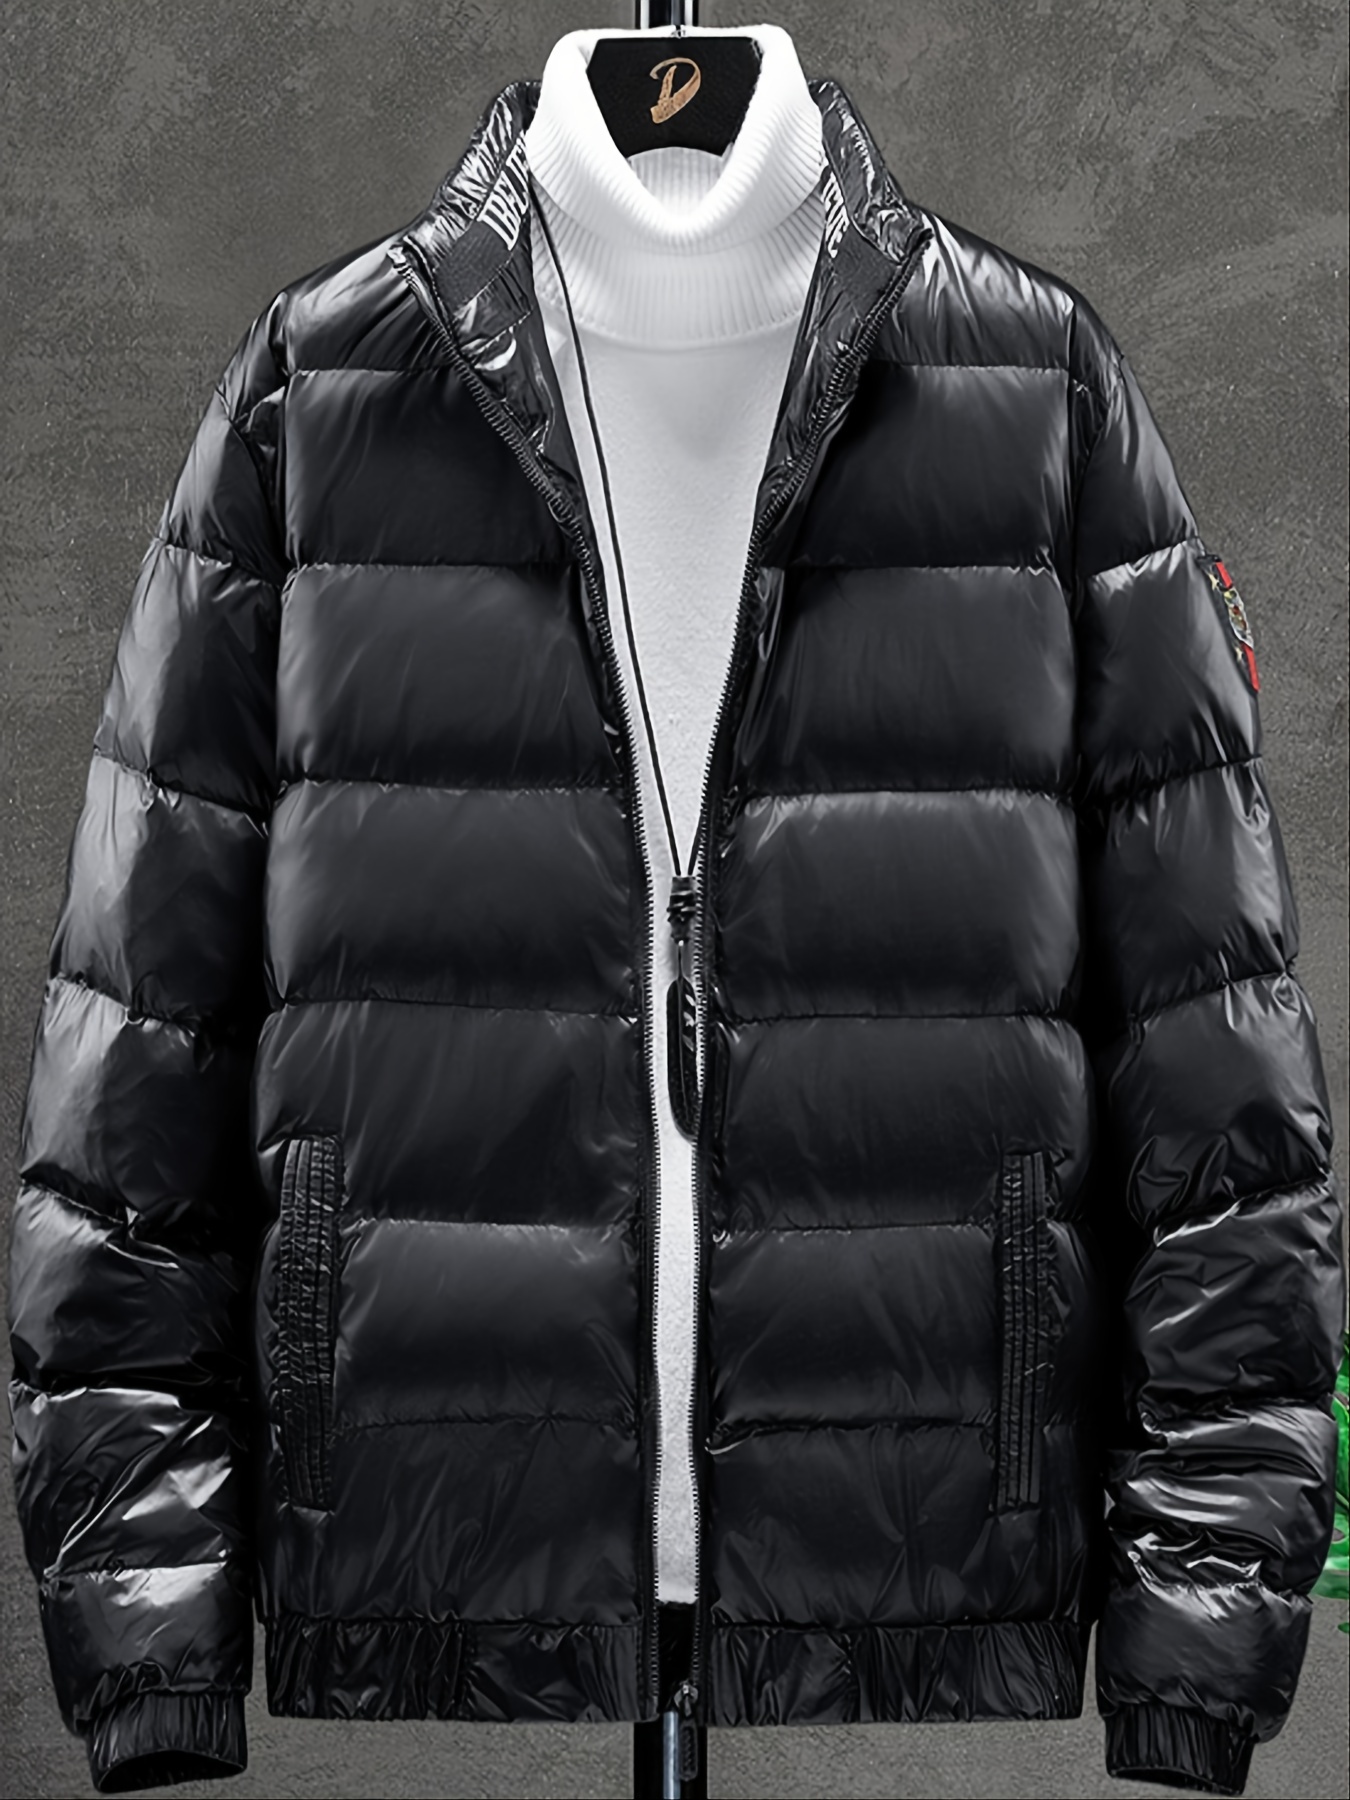 Shop Temu for Men's Jackets &coats - Free Returns Within 90 Days - Temu ...